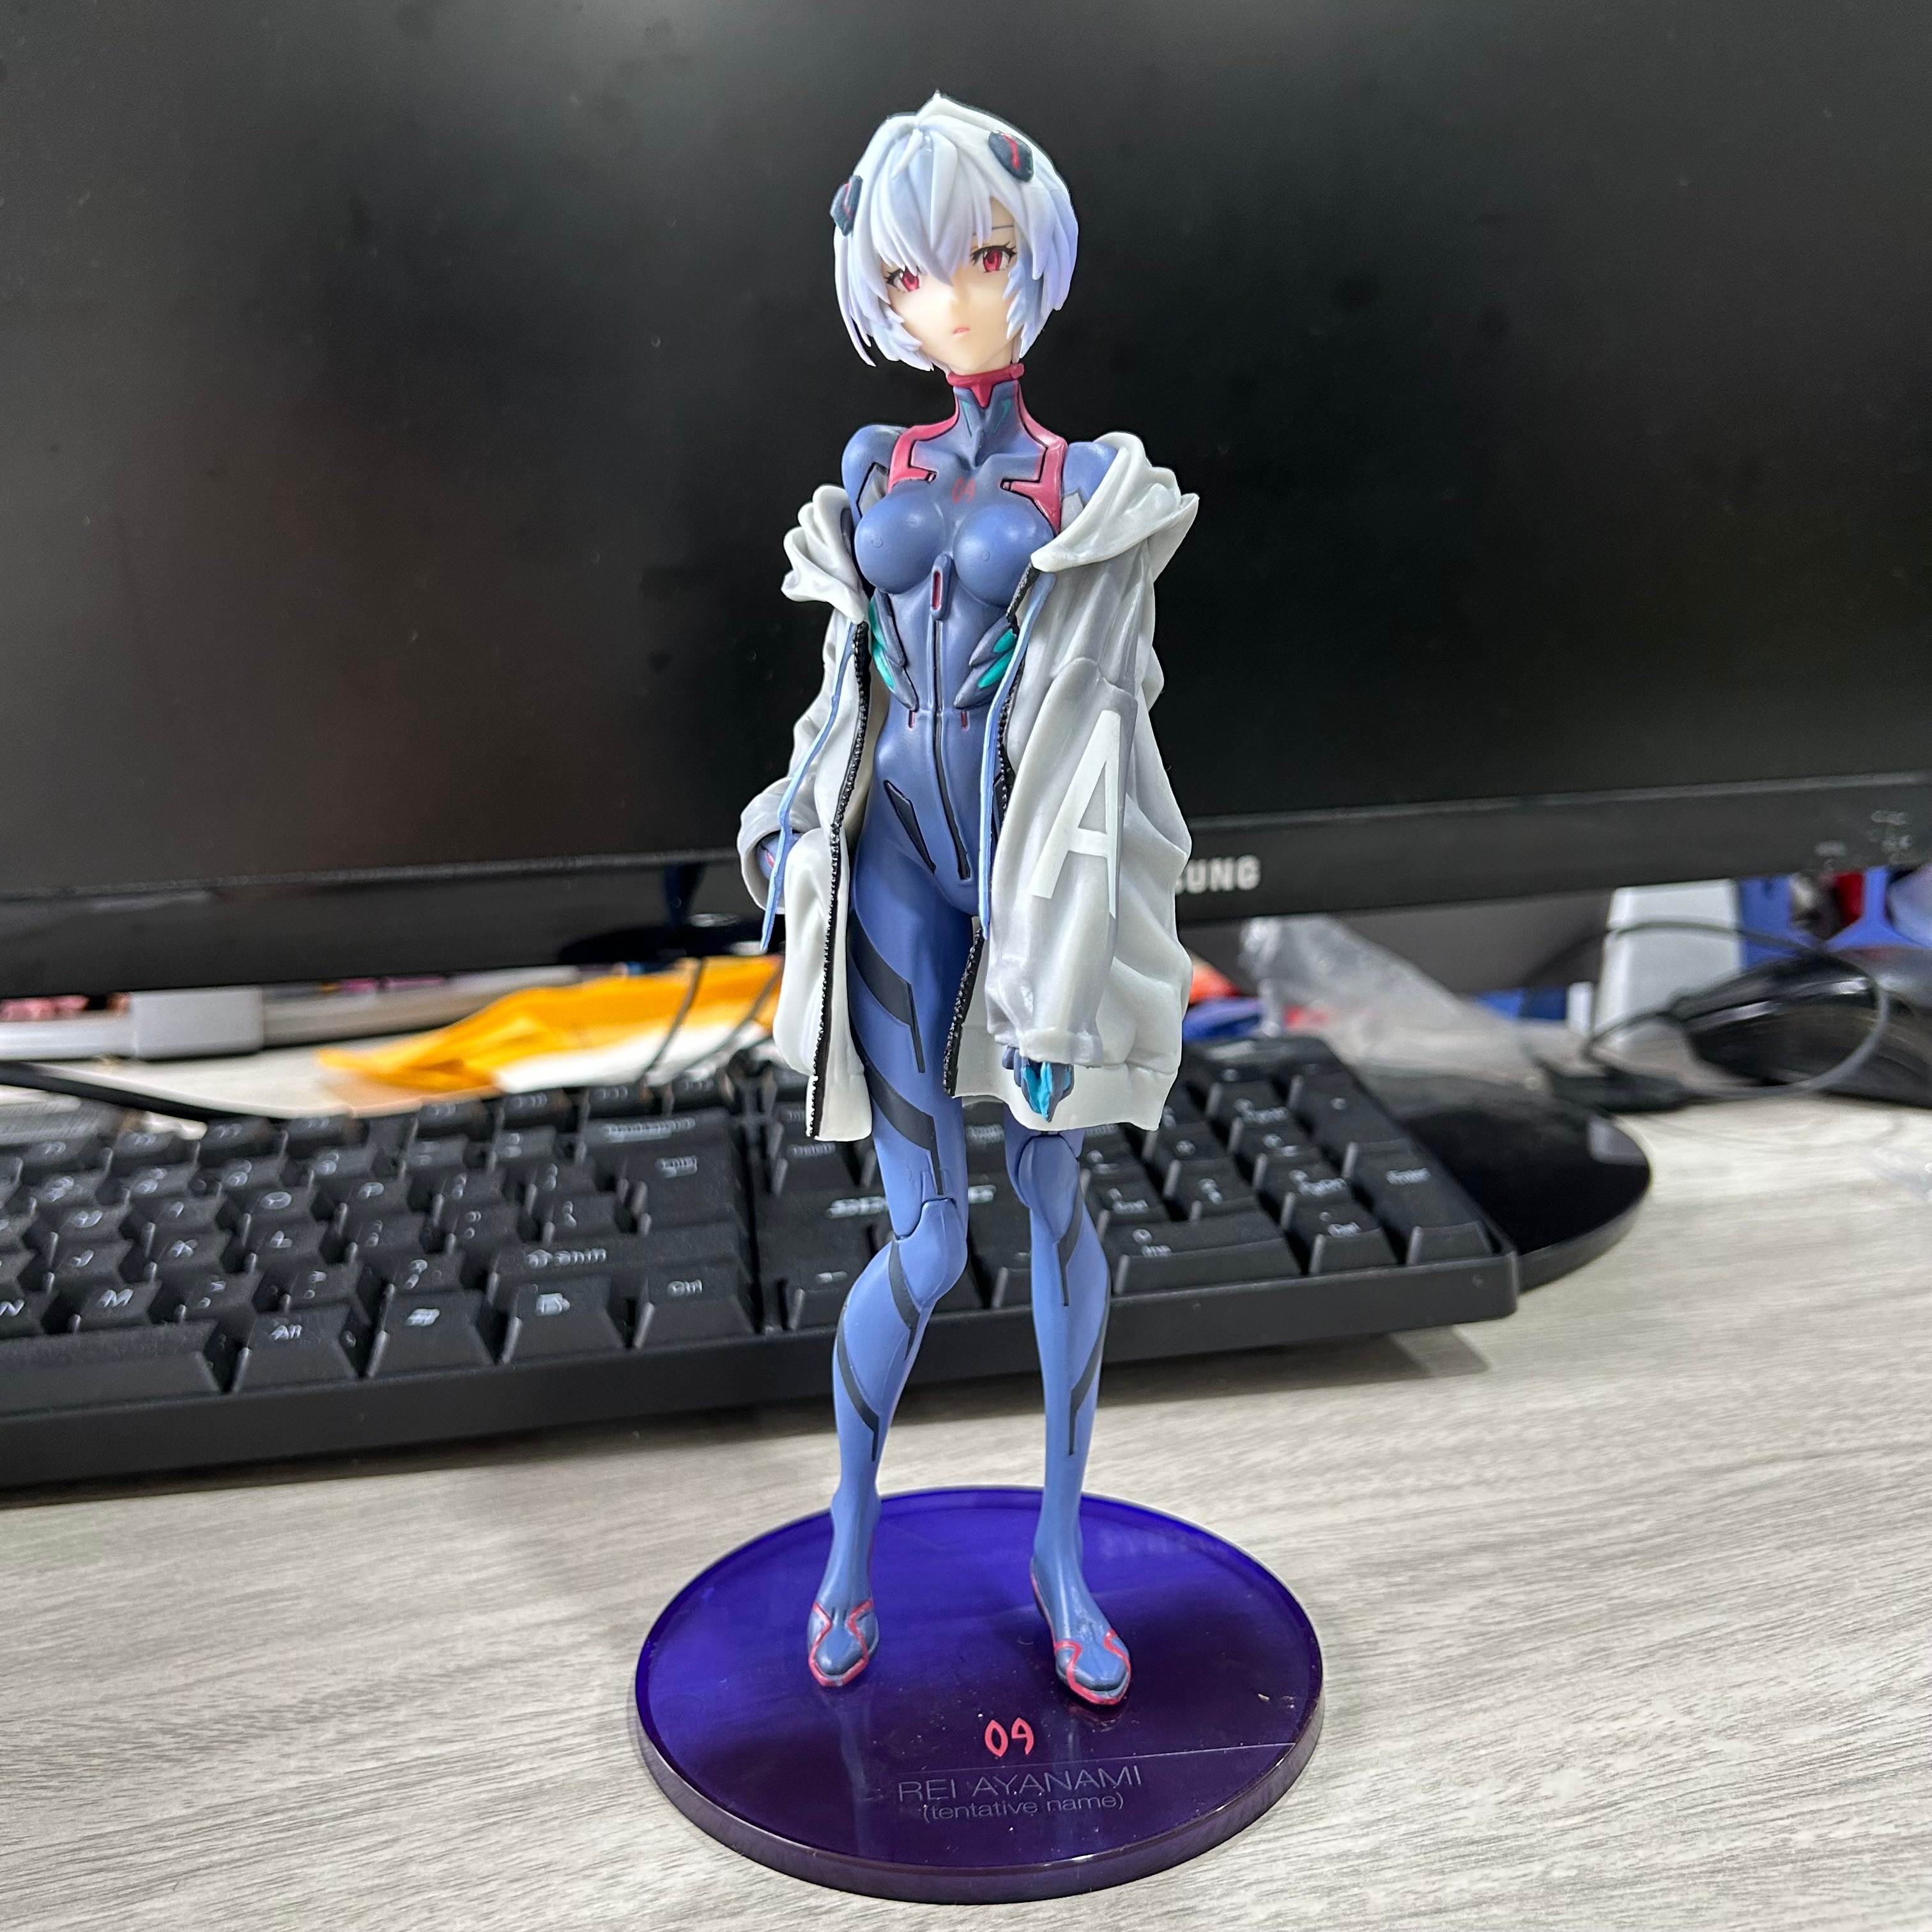 NEON GENESIS EVANGELION Figure Ayanami Rei Figure Kawaii Manga Sexy Hot Girl Toys for Boys Collection 2 - Evangelion Plush